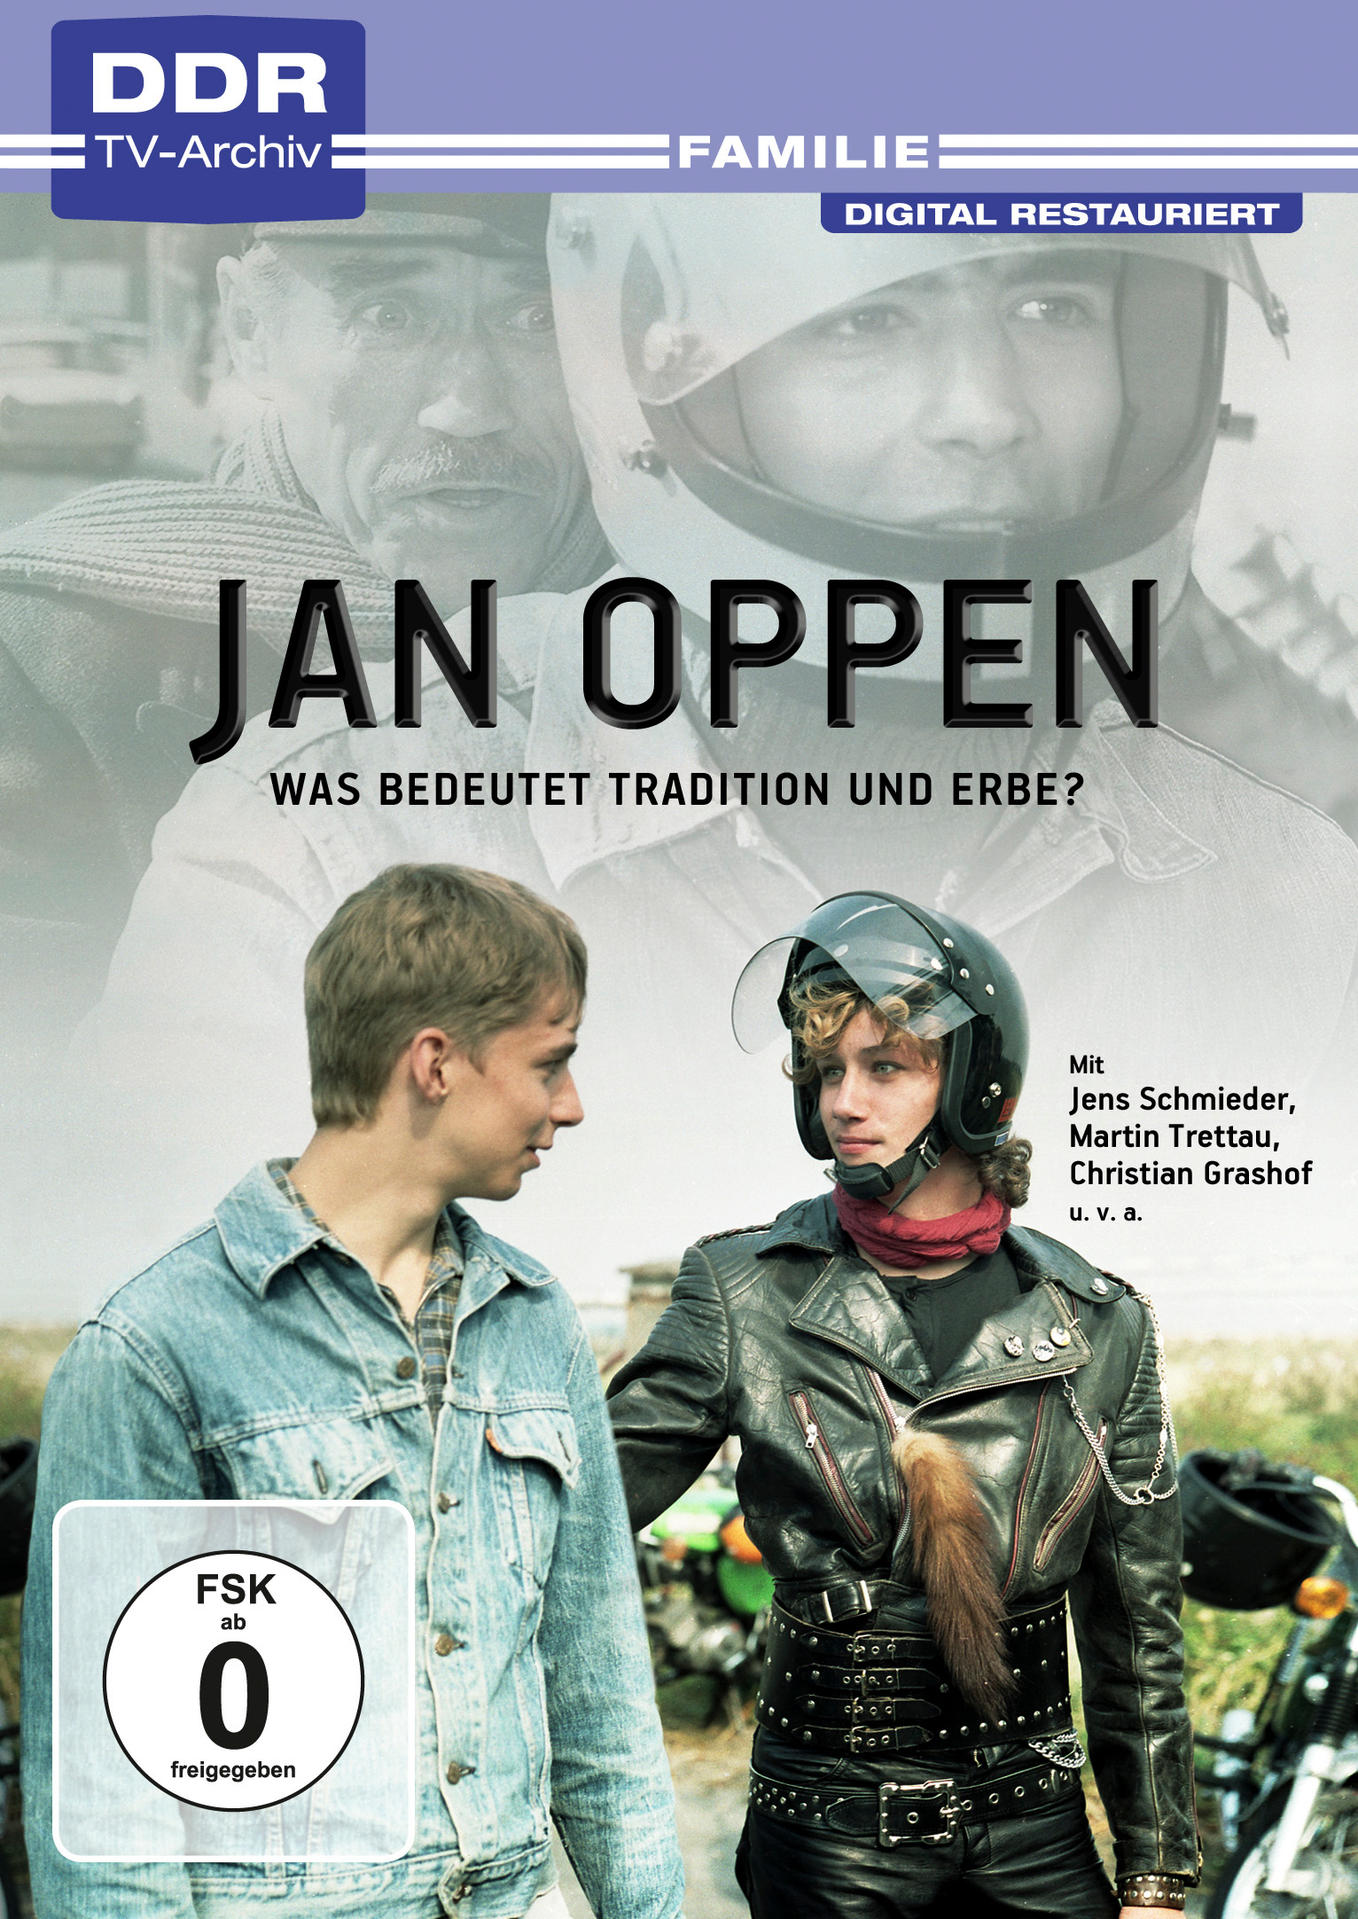 DVD Oppen TV-Archiv) Jan (DDR